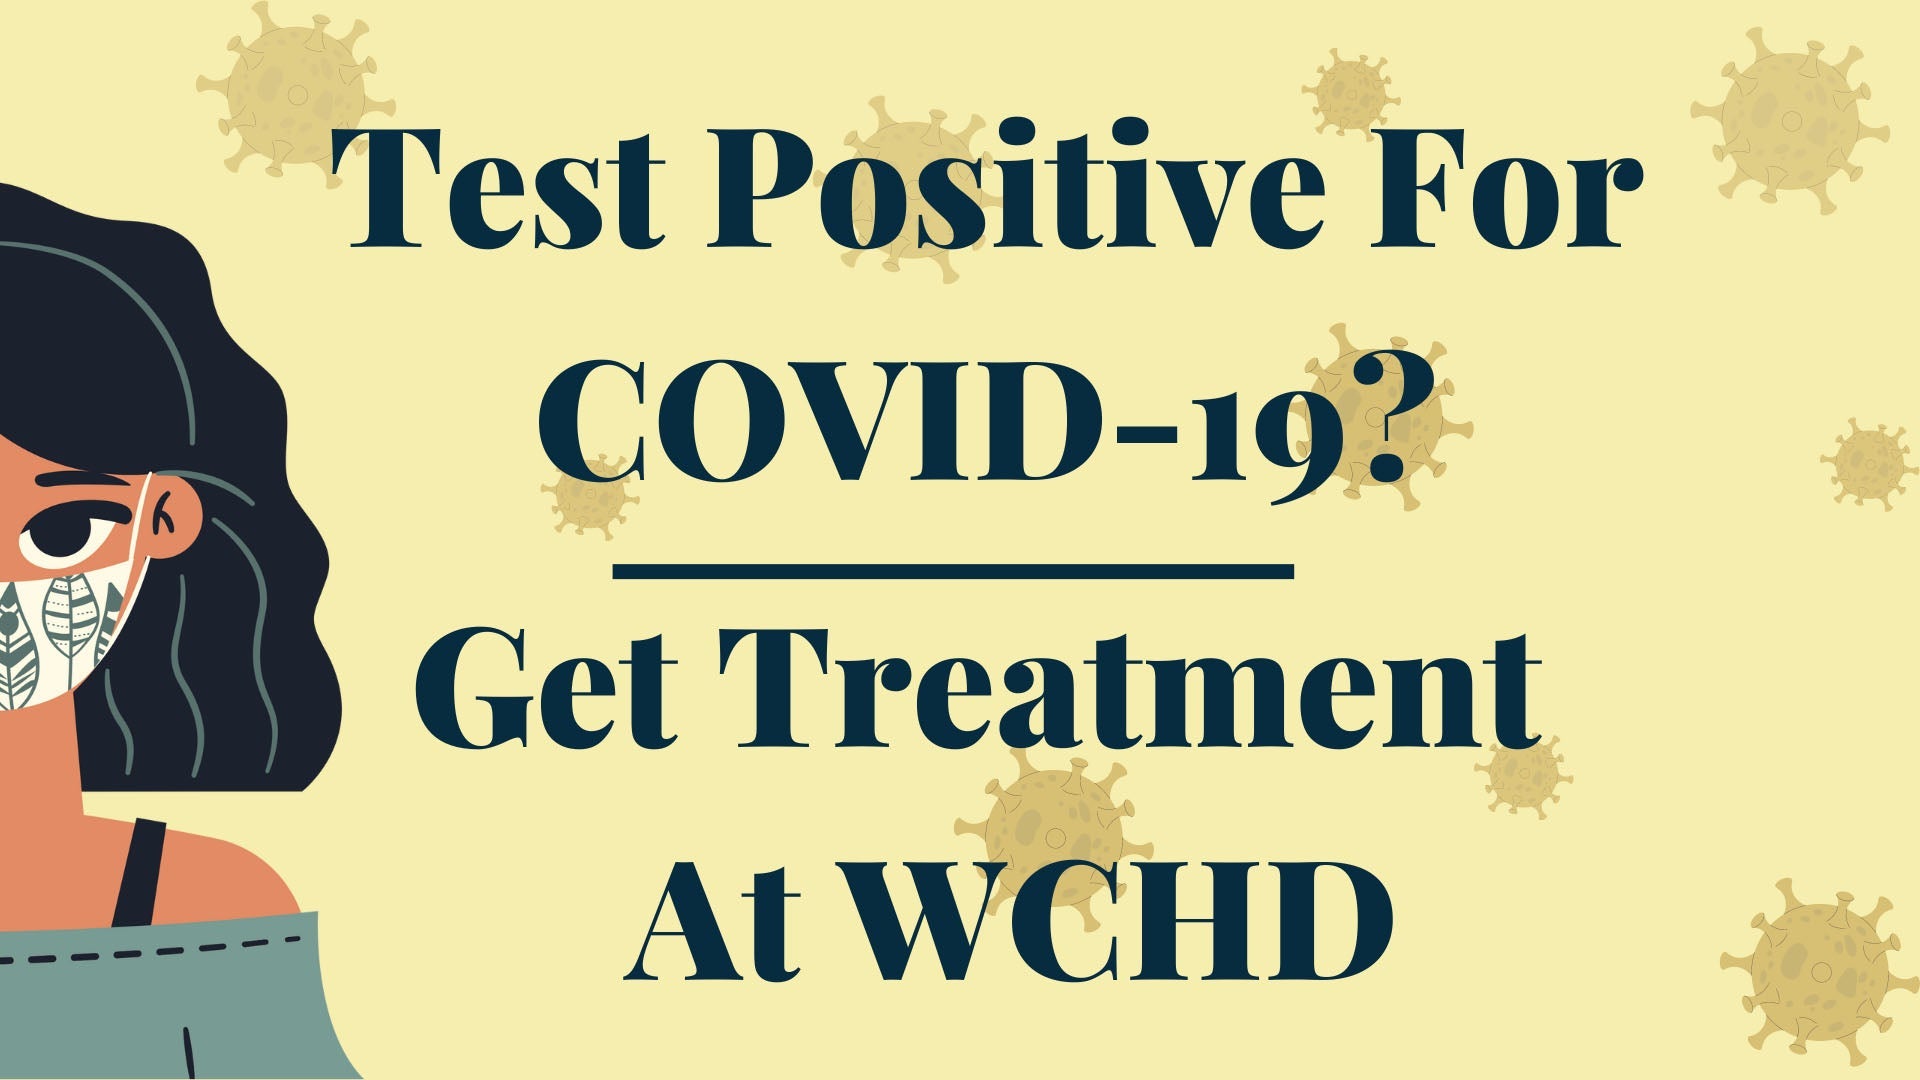 治疗covid-19 -在WCHD接受治疗